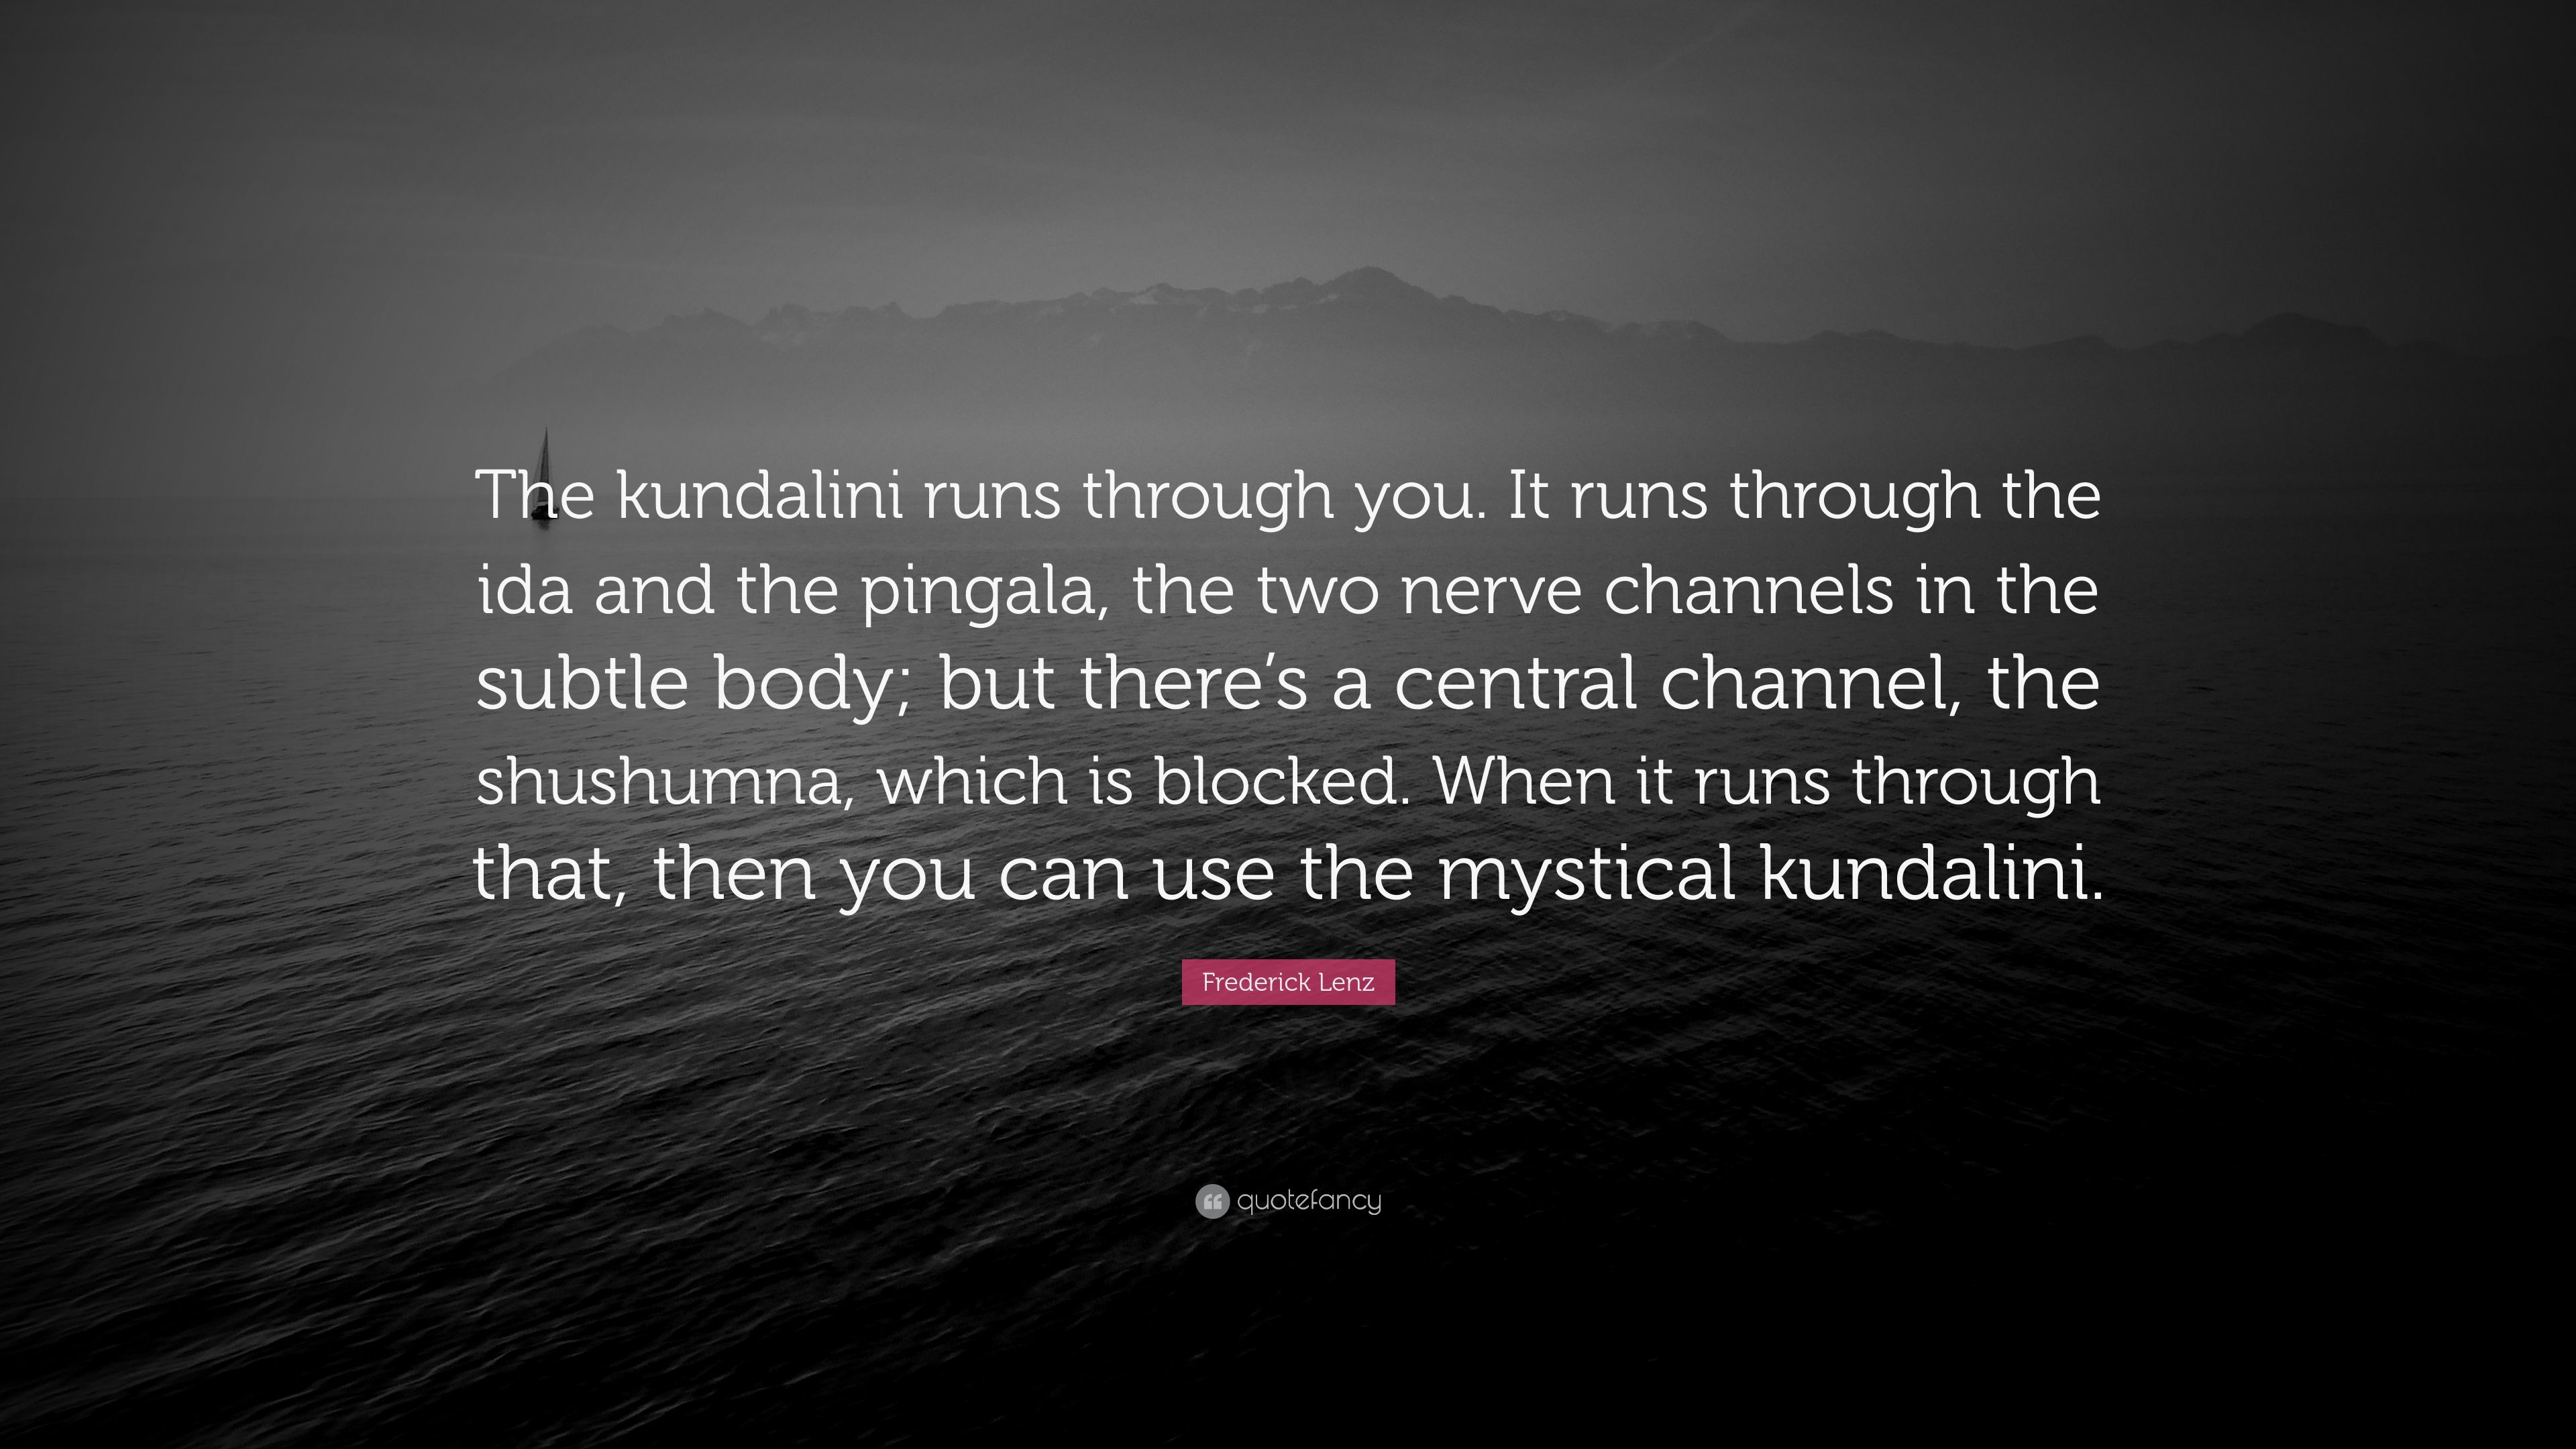 Frederick Lenz Quote: “The kundalini runs through you. It runs